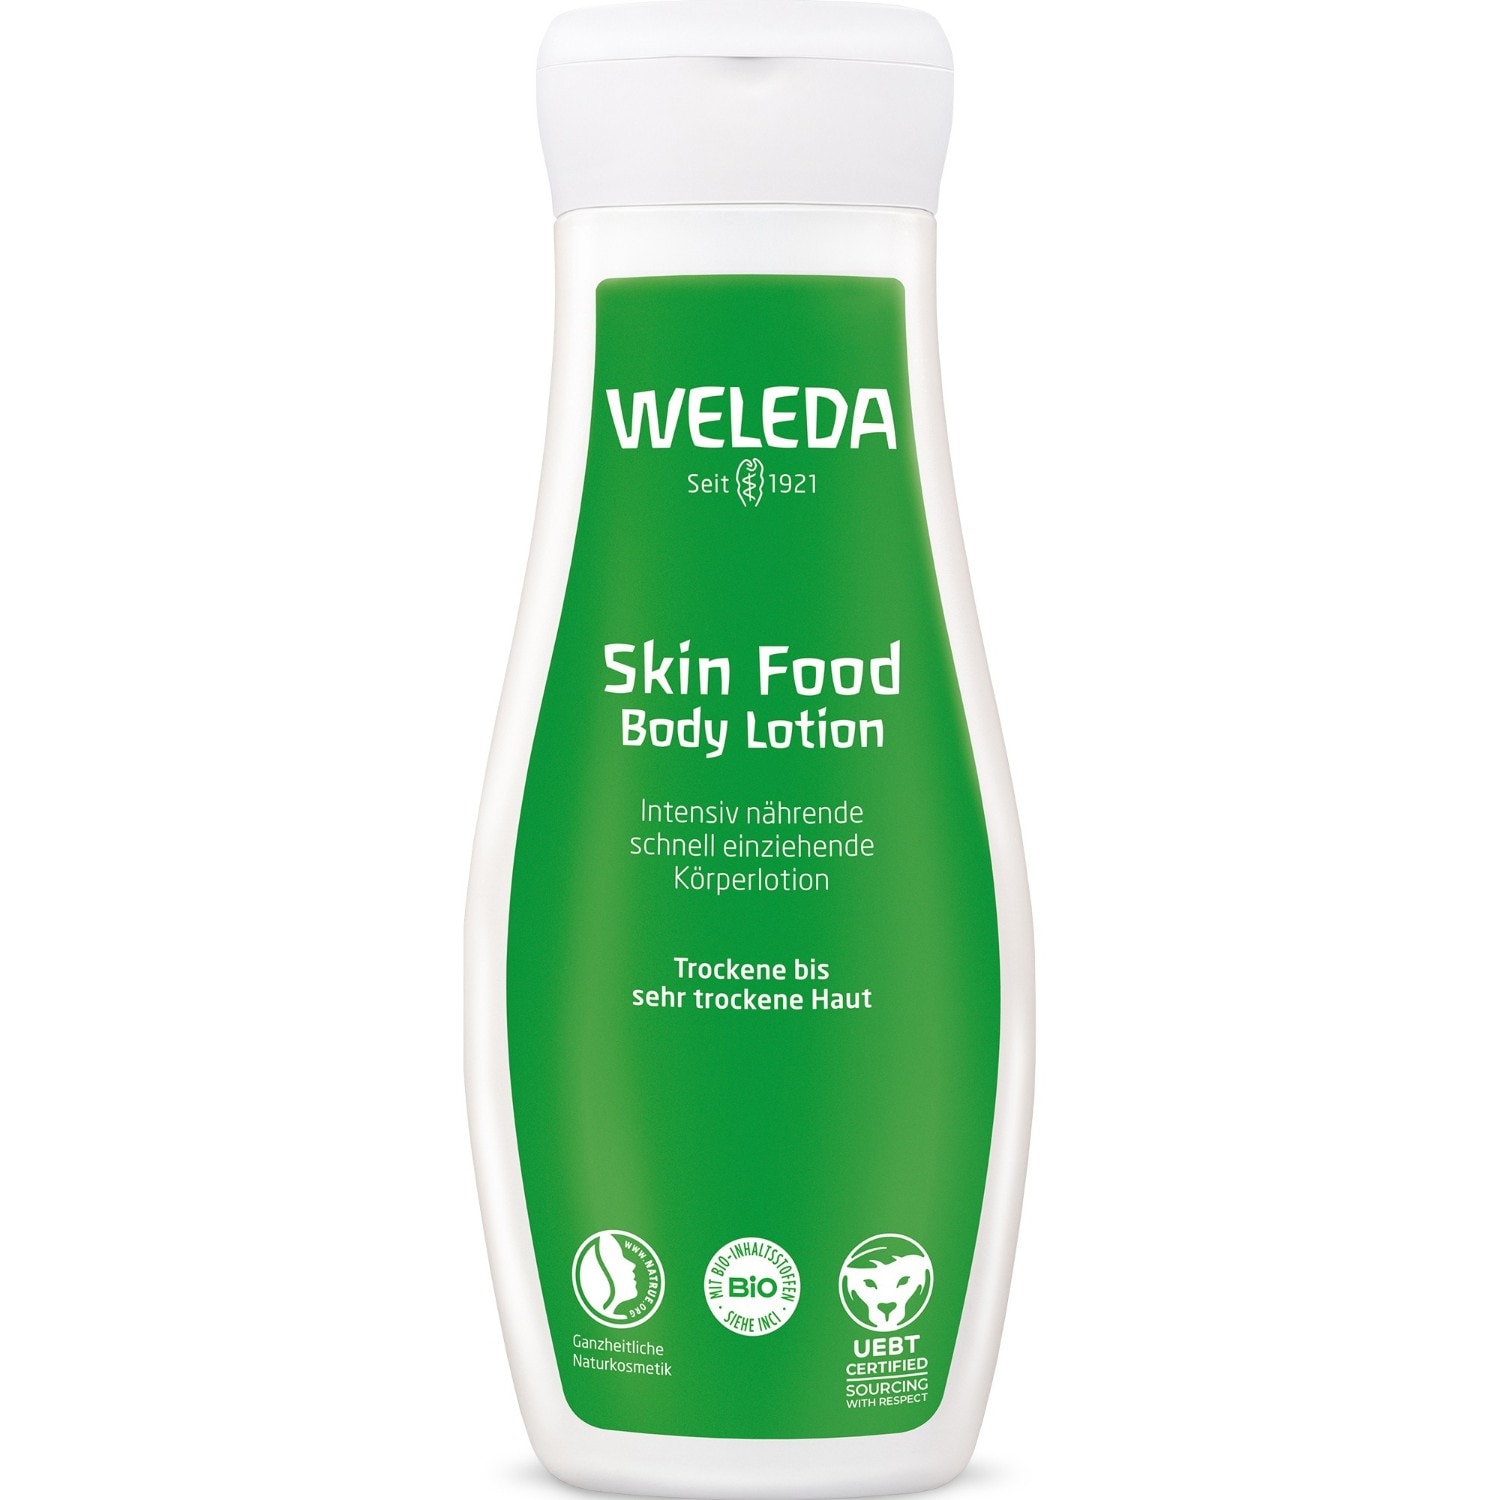 WELEDA Skin Food Body Lotion